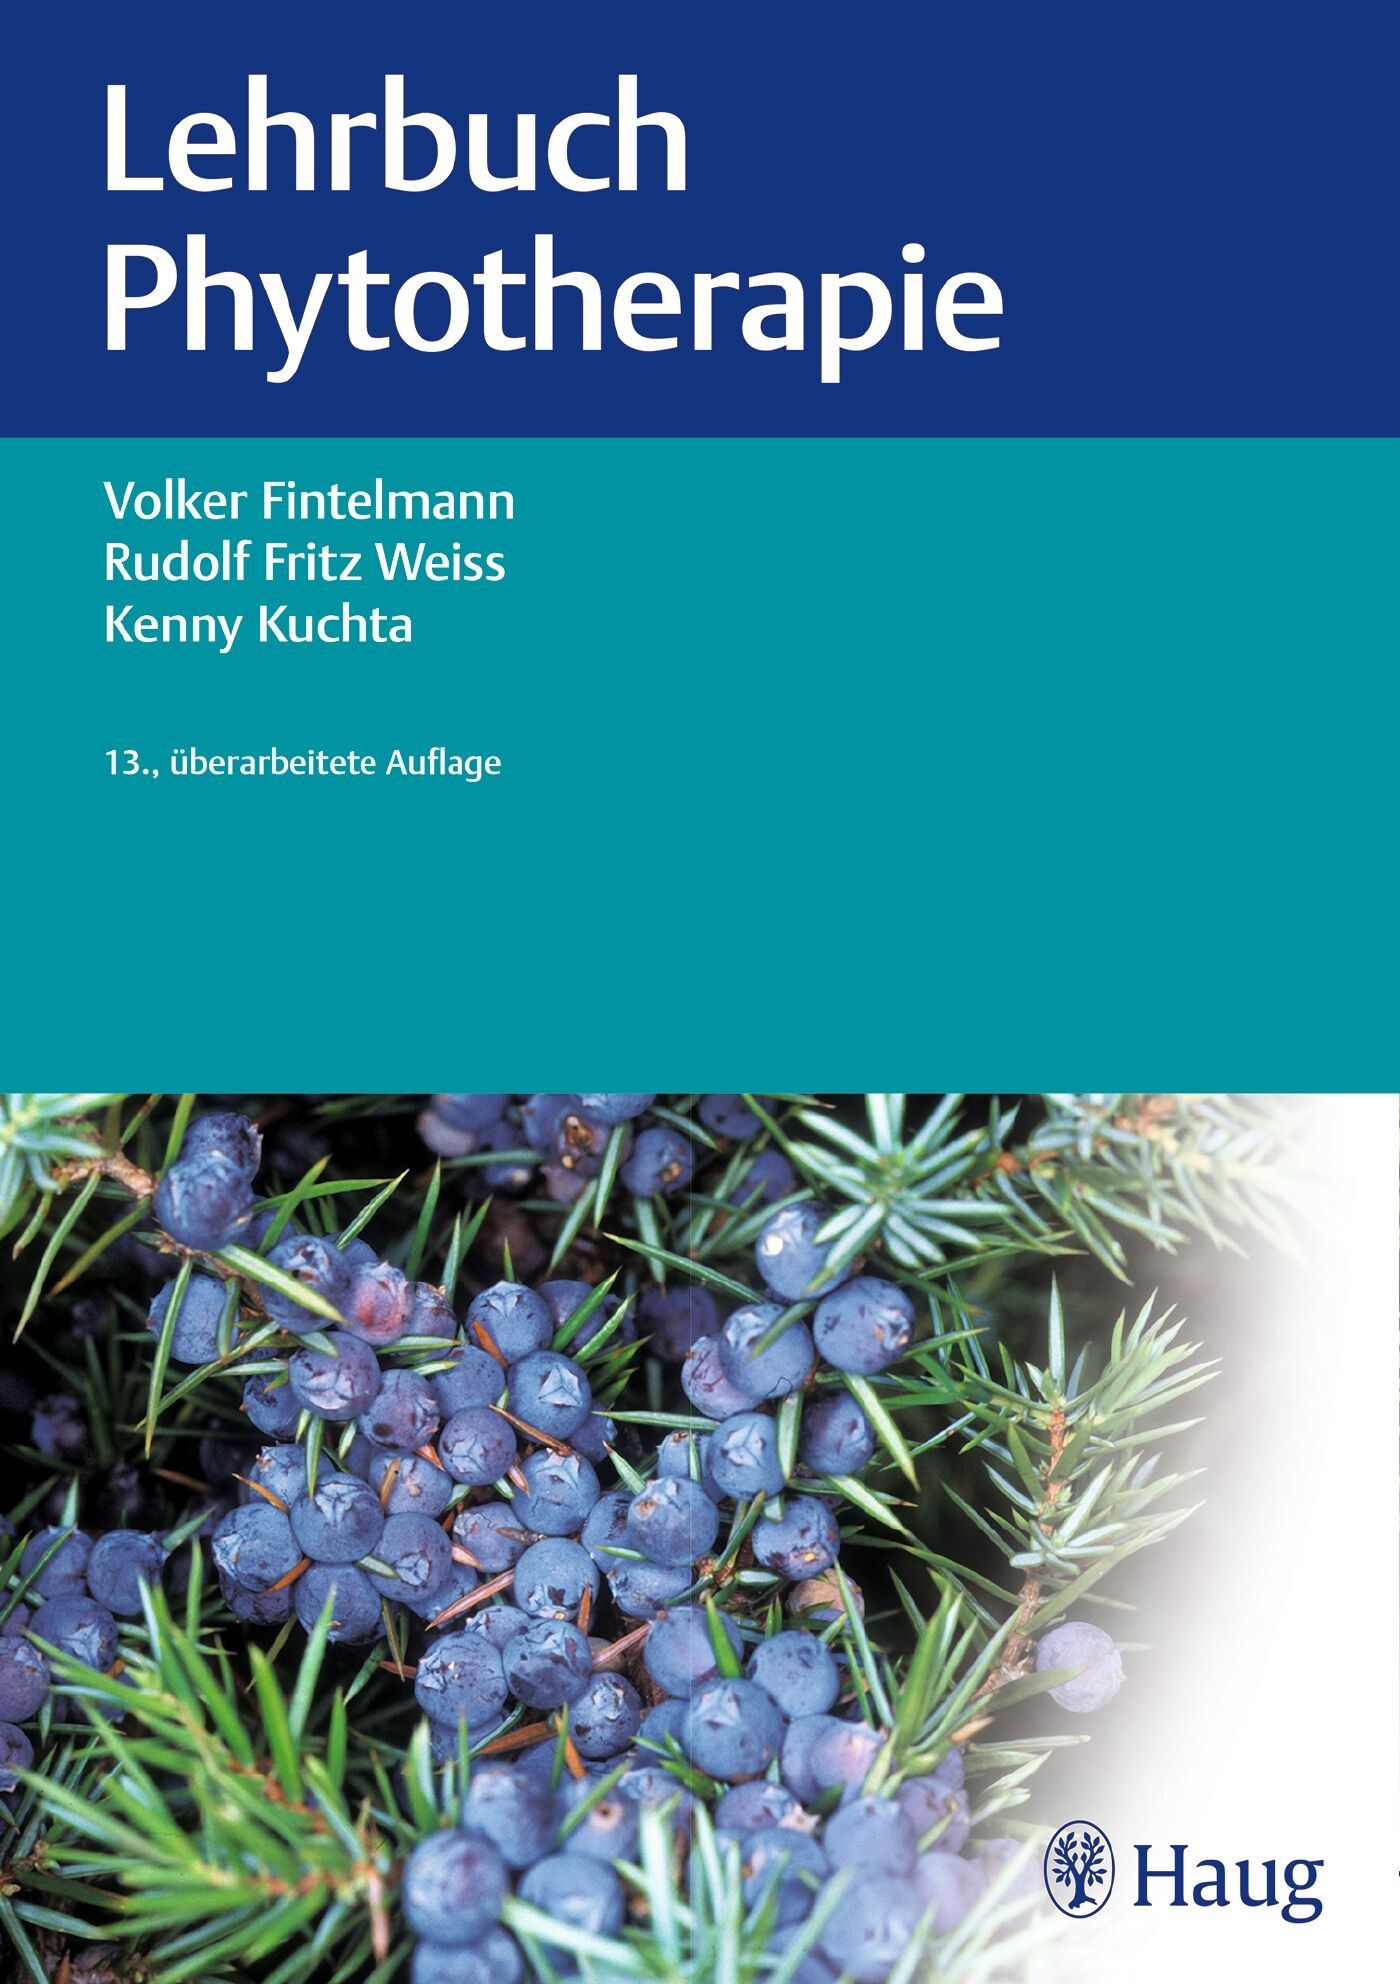 Lehrbuch Phytotherapie, 9783132400177